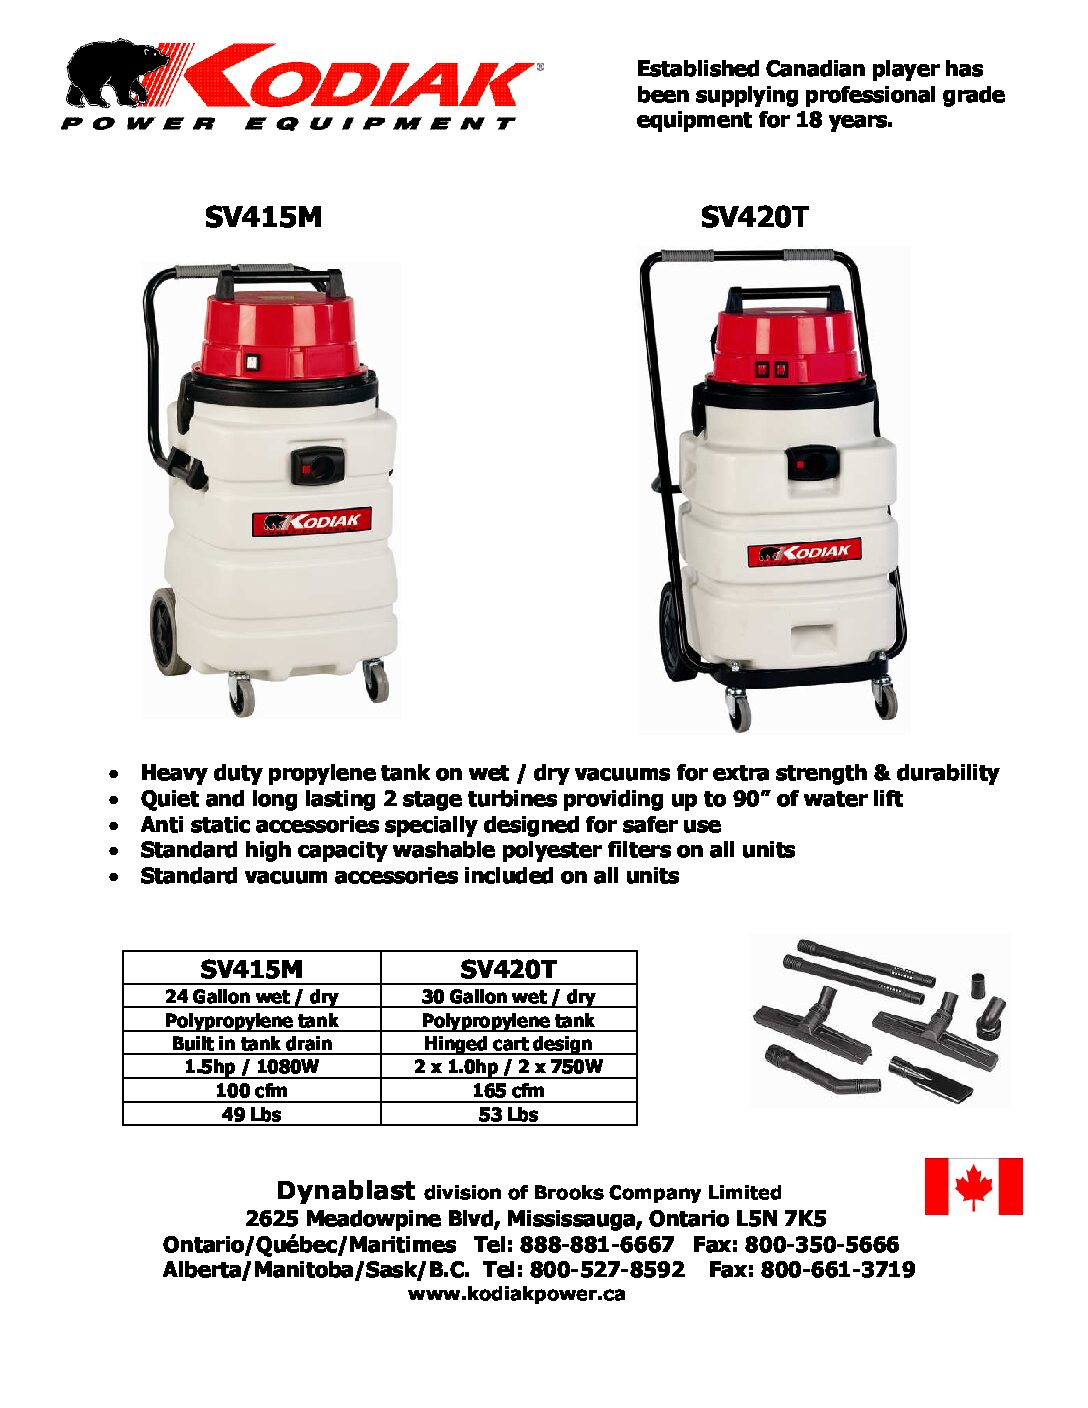 Kodiak SV420T Vacuums Product Sheet